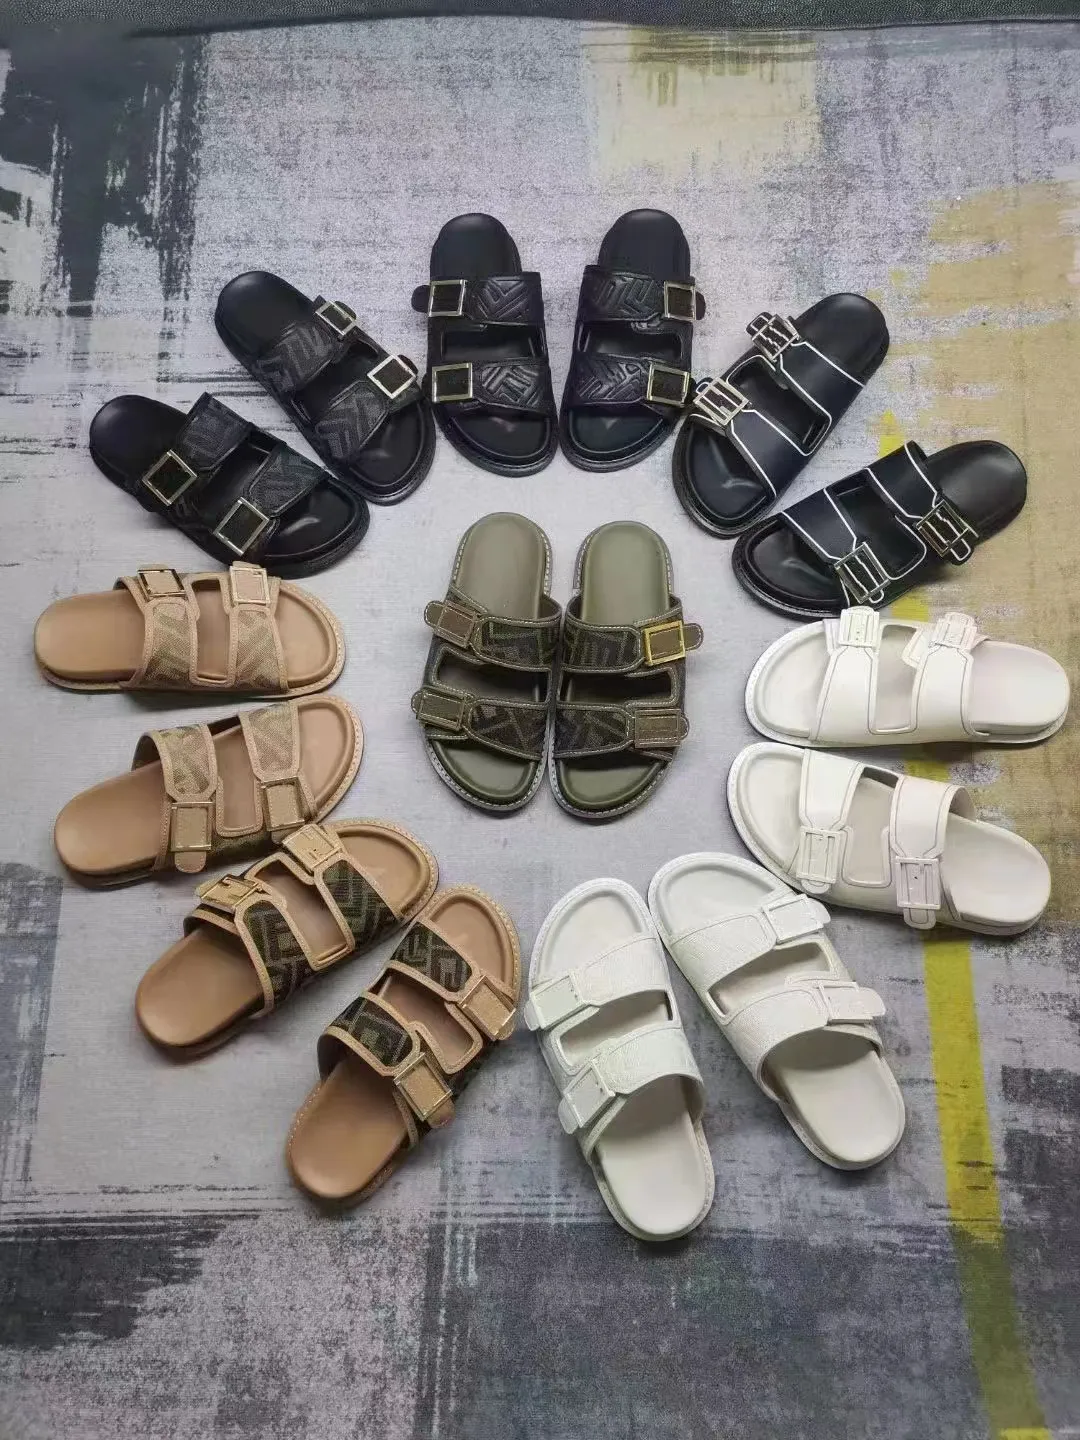 2022 SMIPLER SLIPPERS New Men's Summer Rubber Sandals Slides Slides Fashion Glippers مقاومة للأحذية الداخلية الحجم 35-45